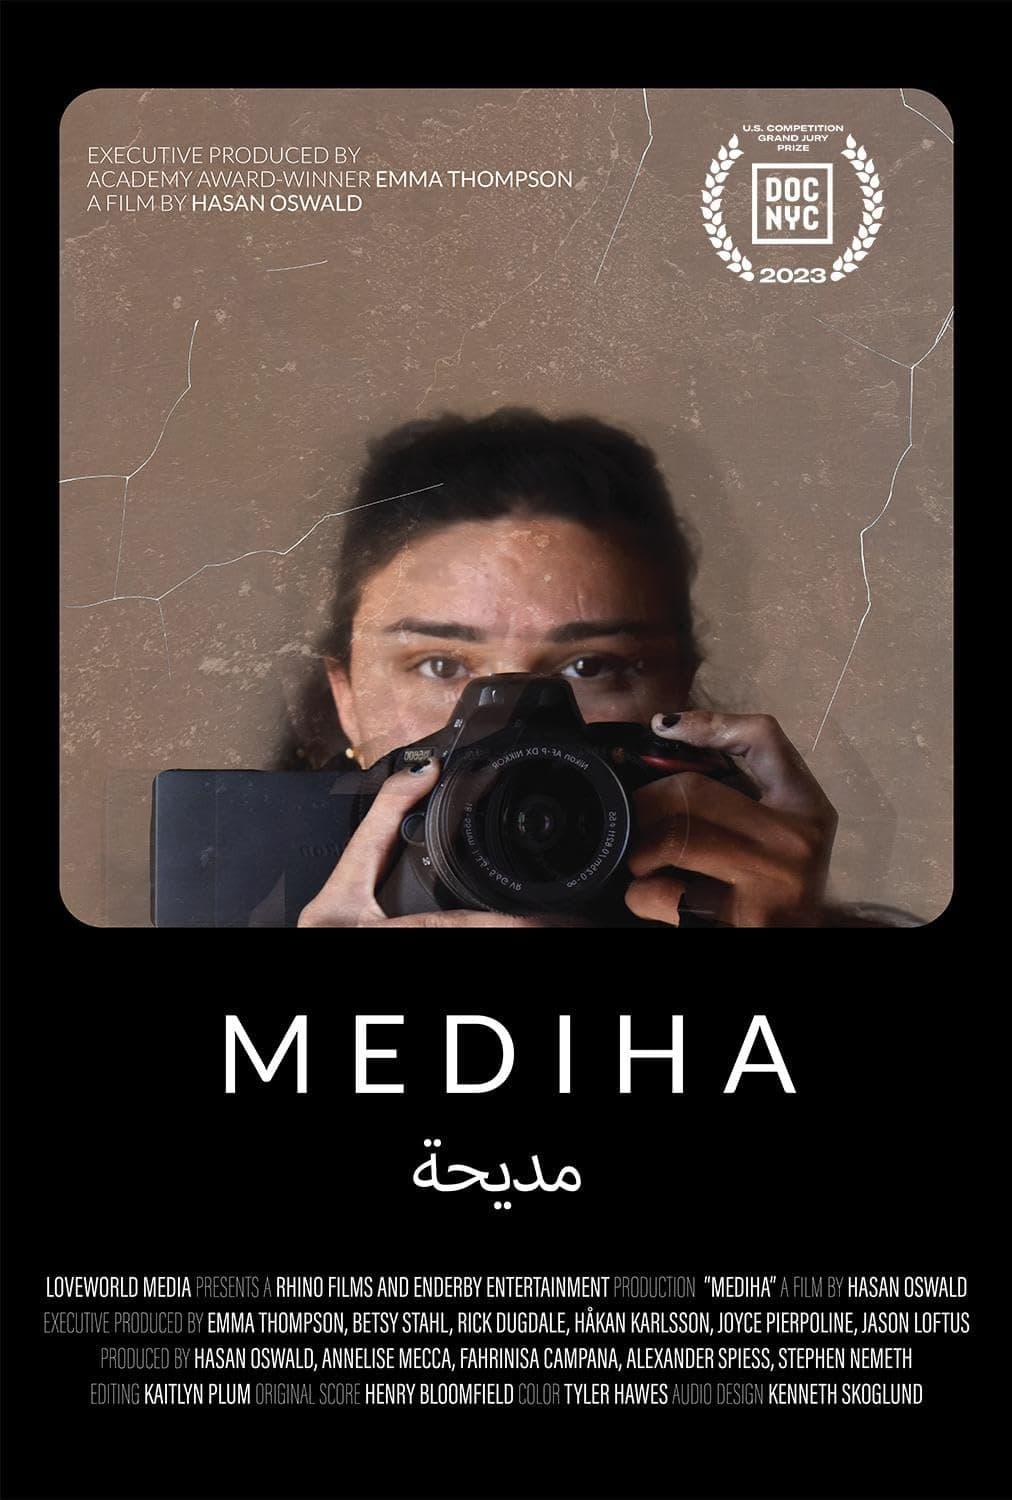 Mediha poster